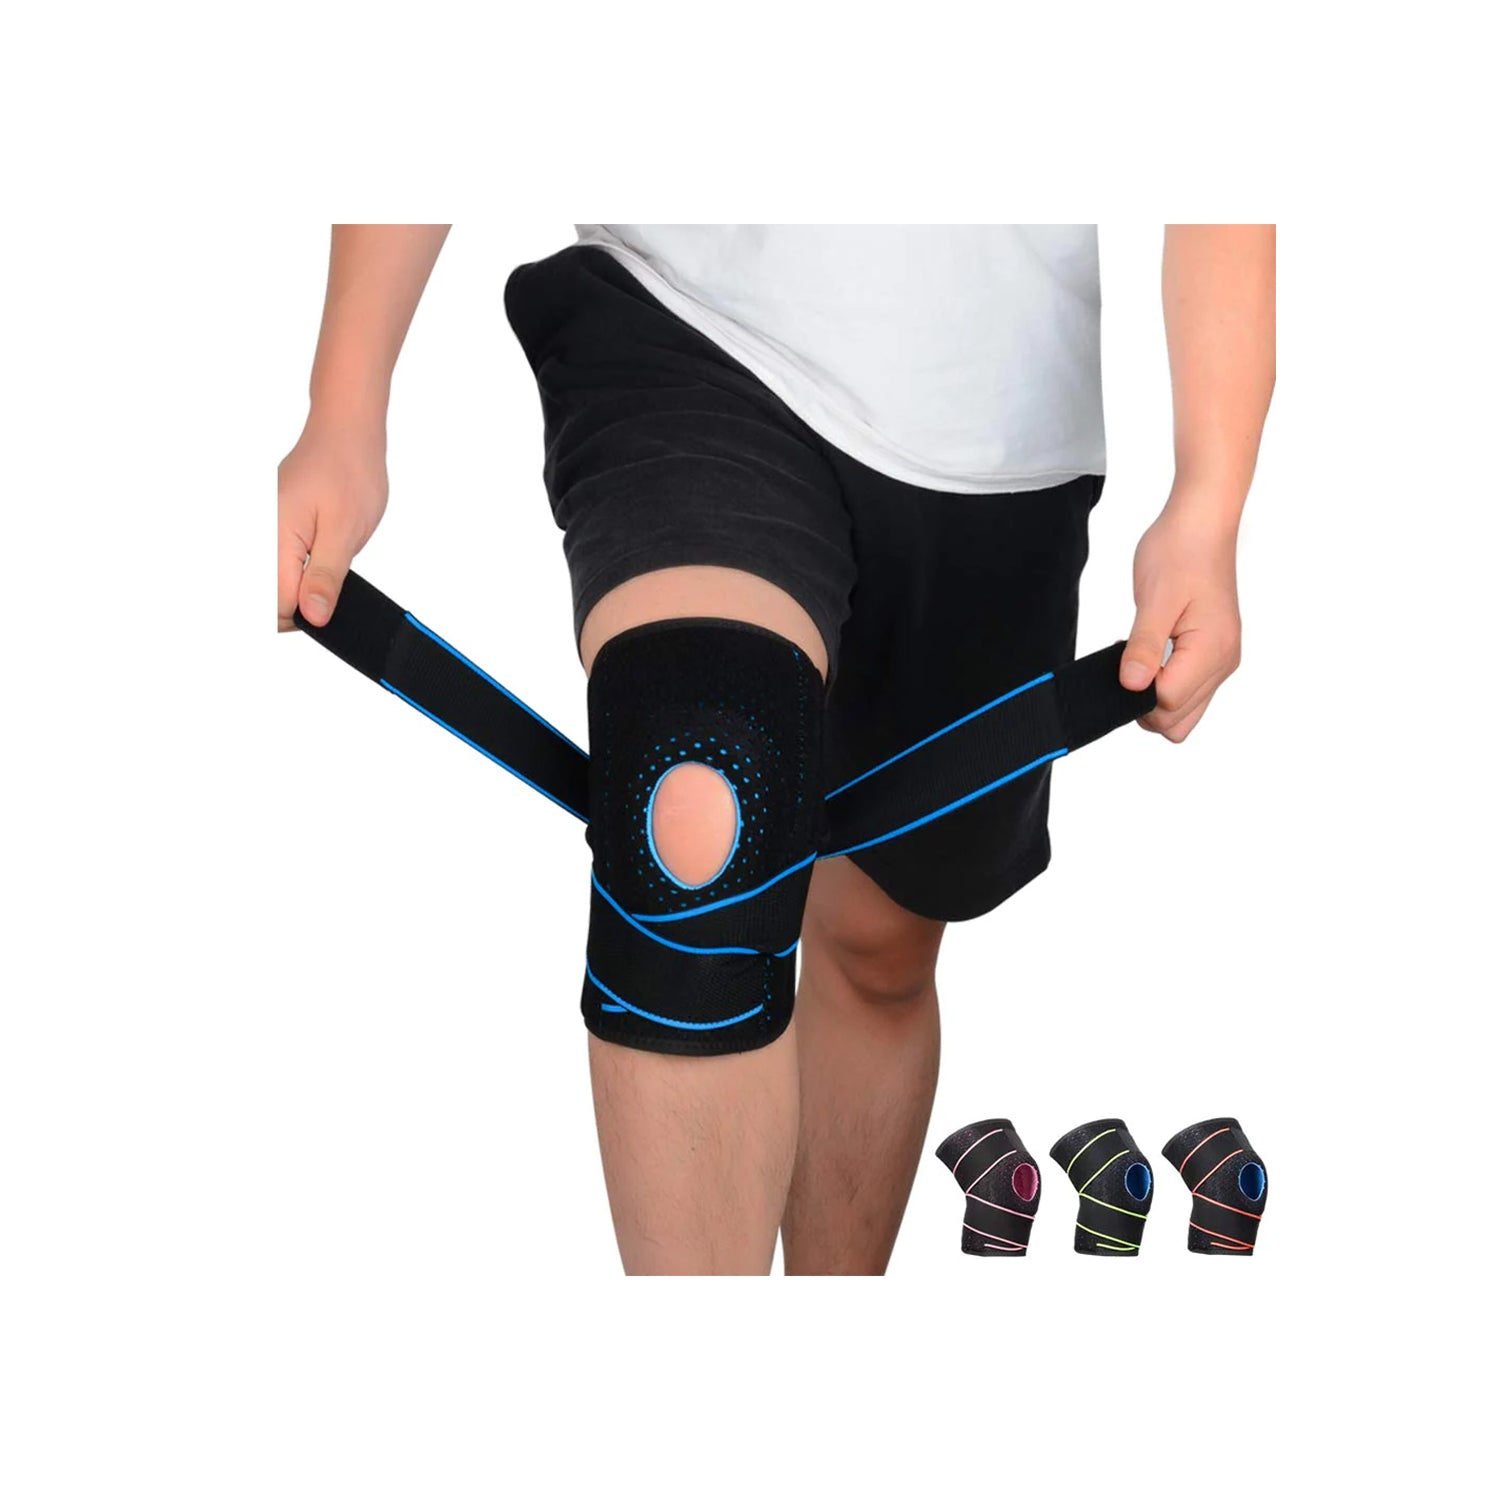 Knee Brace Patella Stabilizer Knee Pain Relief – SupreGear